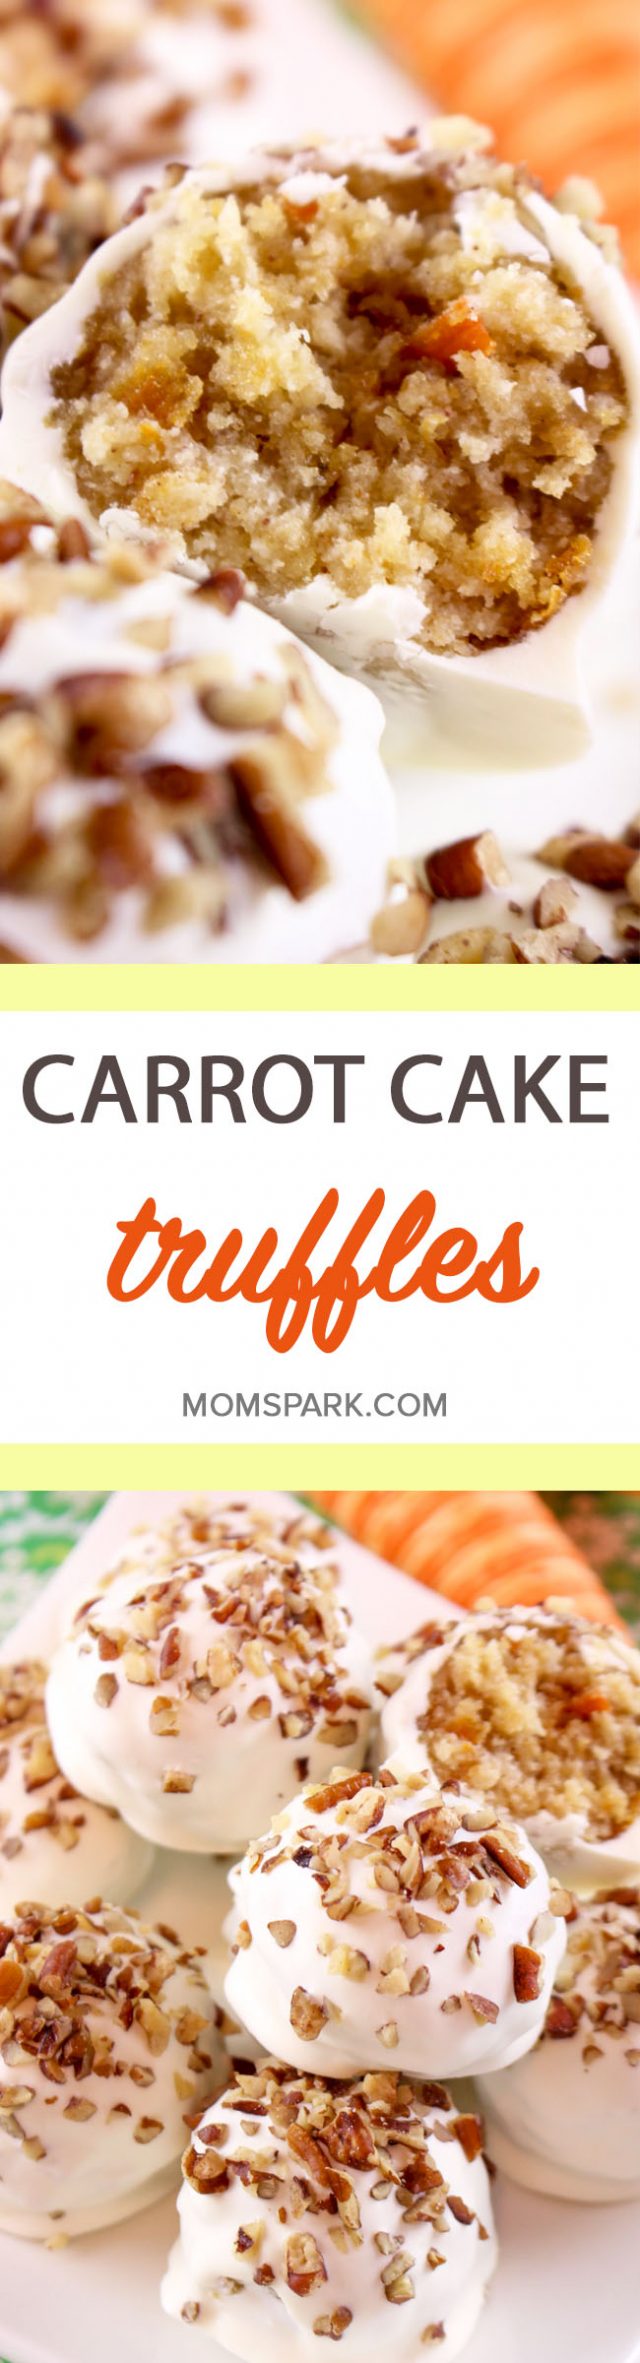 Carrot Cake Truffle Recipe